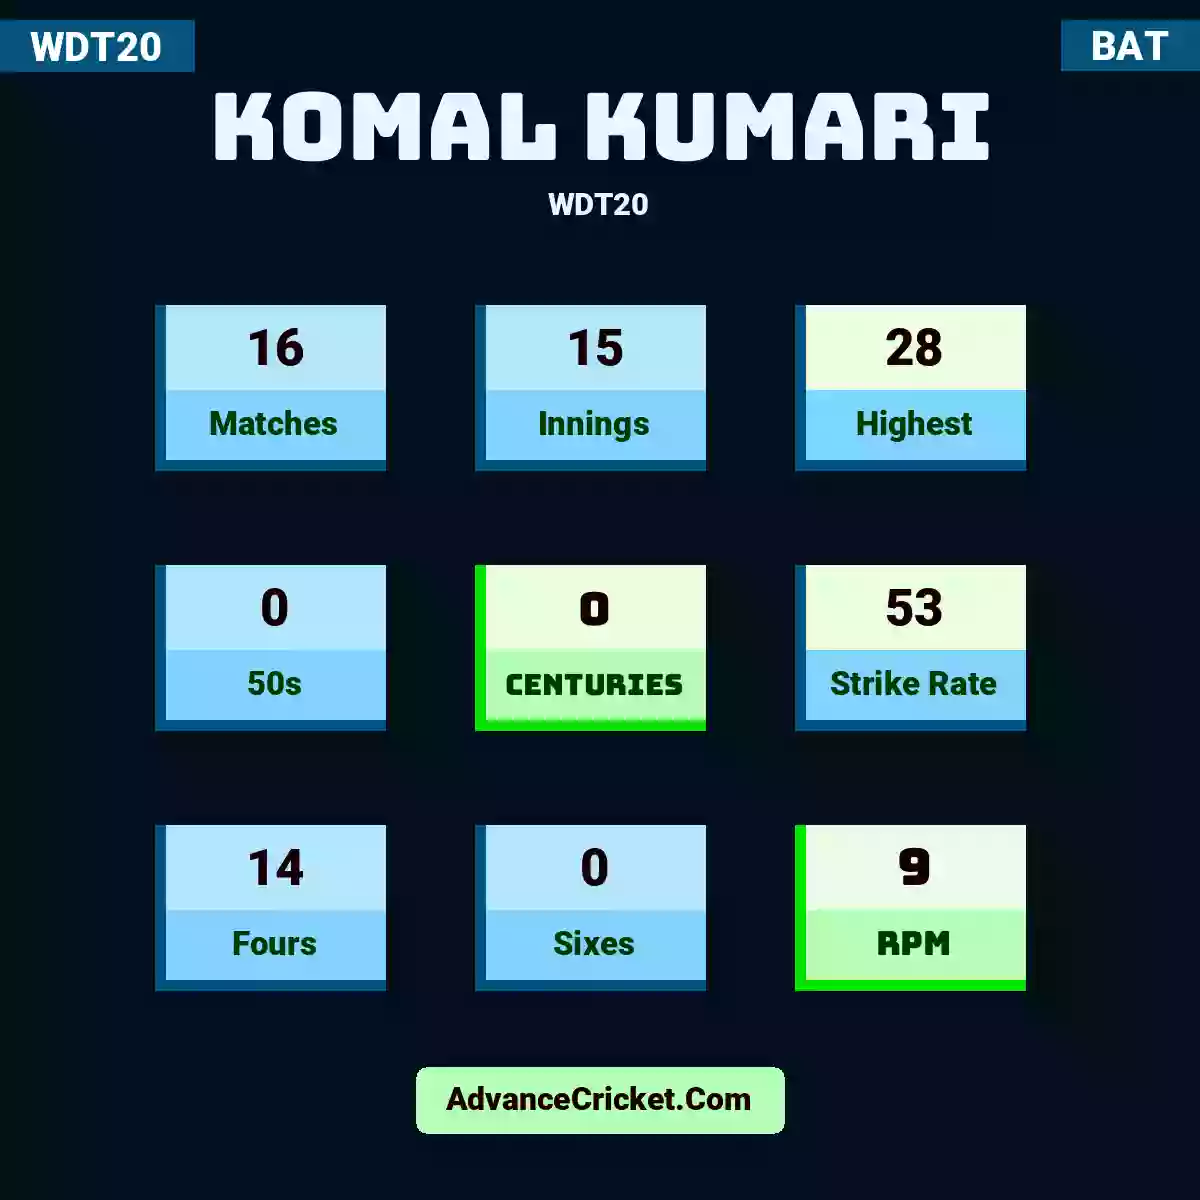 Komal Kumari WDT20 , Komal Kumari played 16 matches, scored 28 runs as highest, 0 half-centuries, and 0 centuries, with a strike rate of 53. K.Kumari hit 14 fours and 0 sixes, with an RPM of 9.